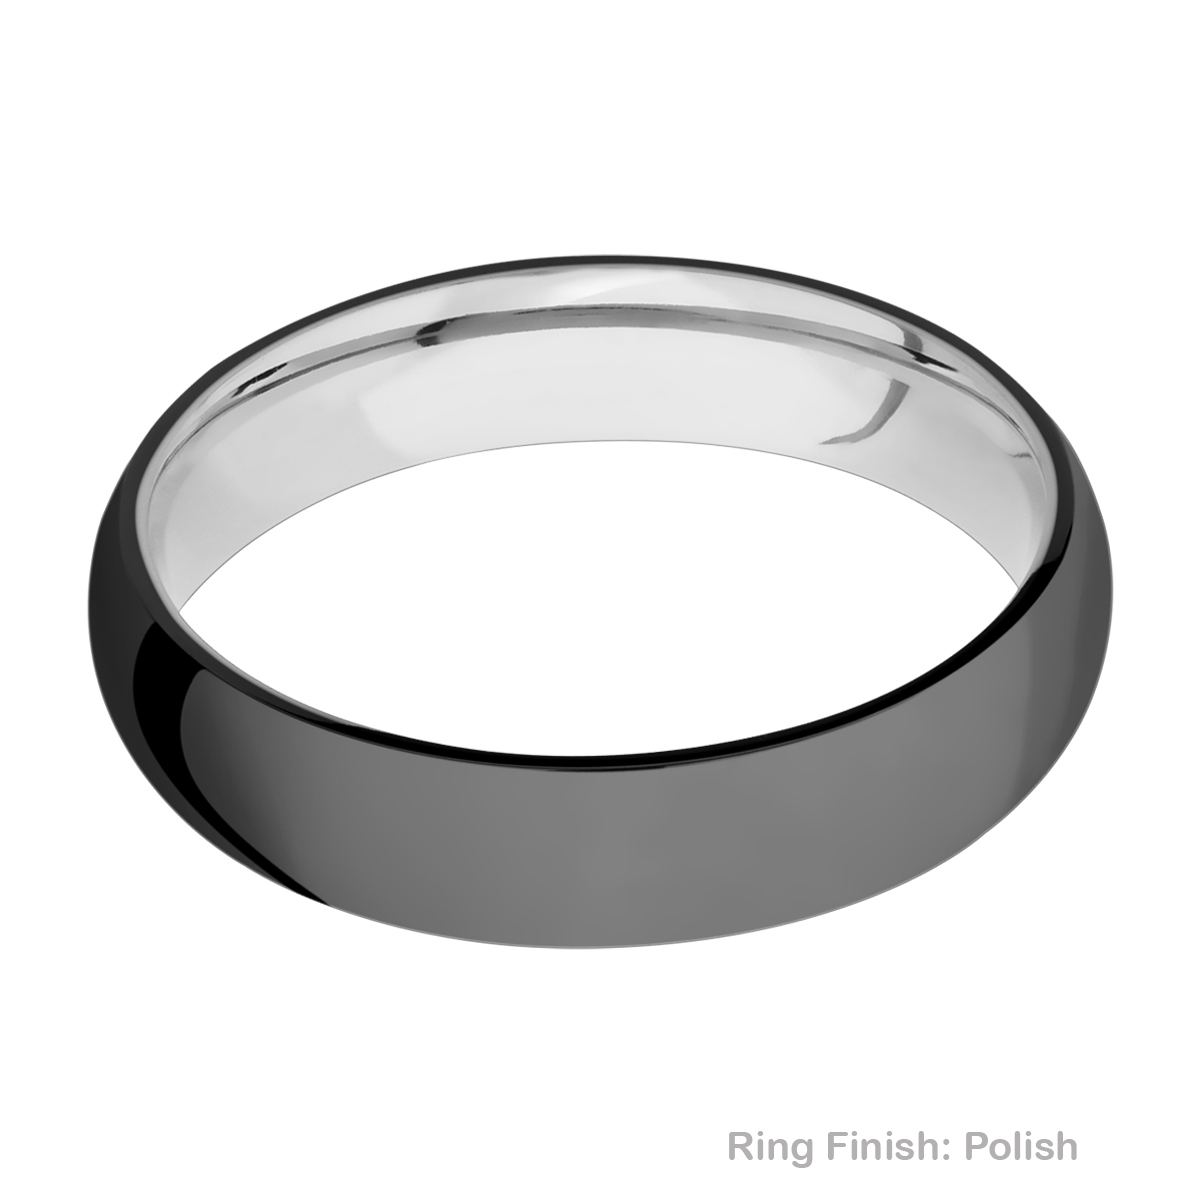 Lashbrook CCSLEEVEZ5D Zirconium and Cobalt Chrome Wedding Ring or Band Alternative View 3